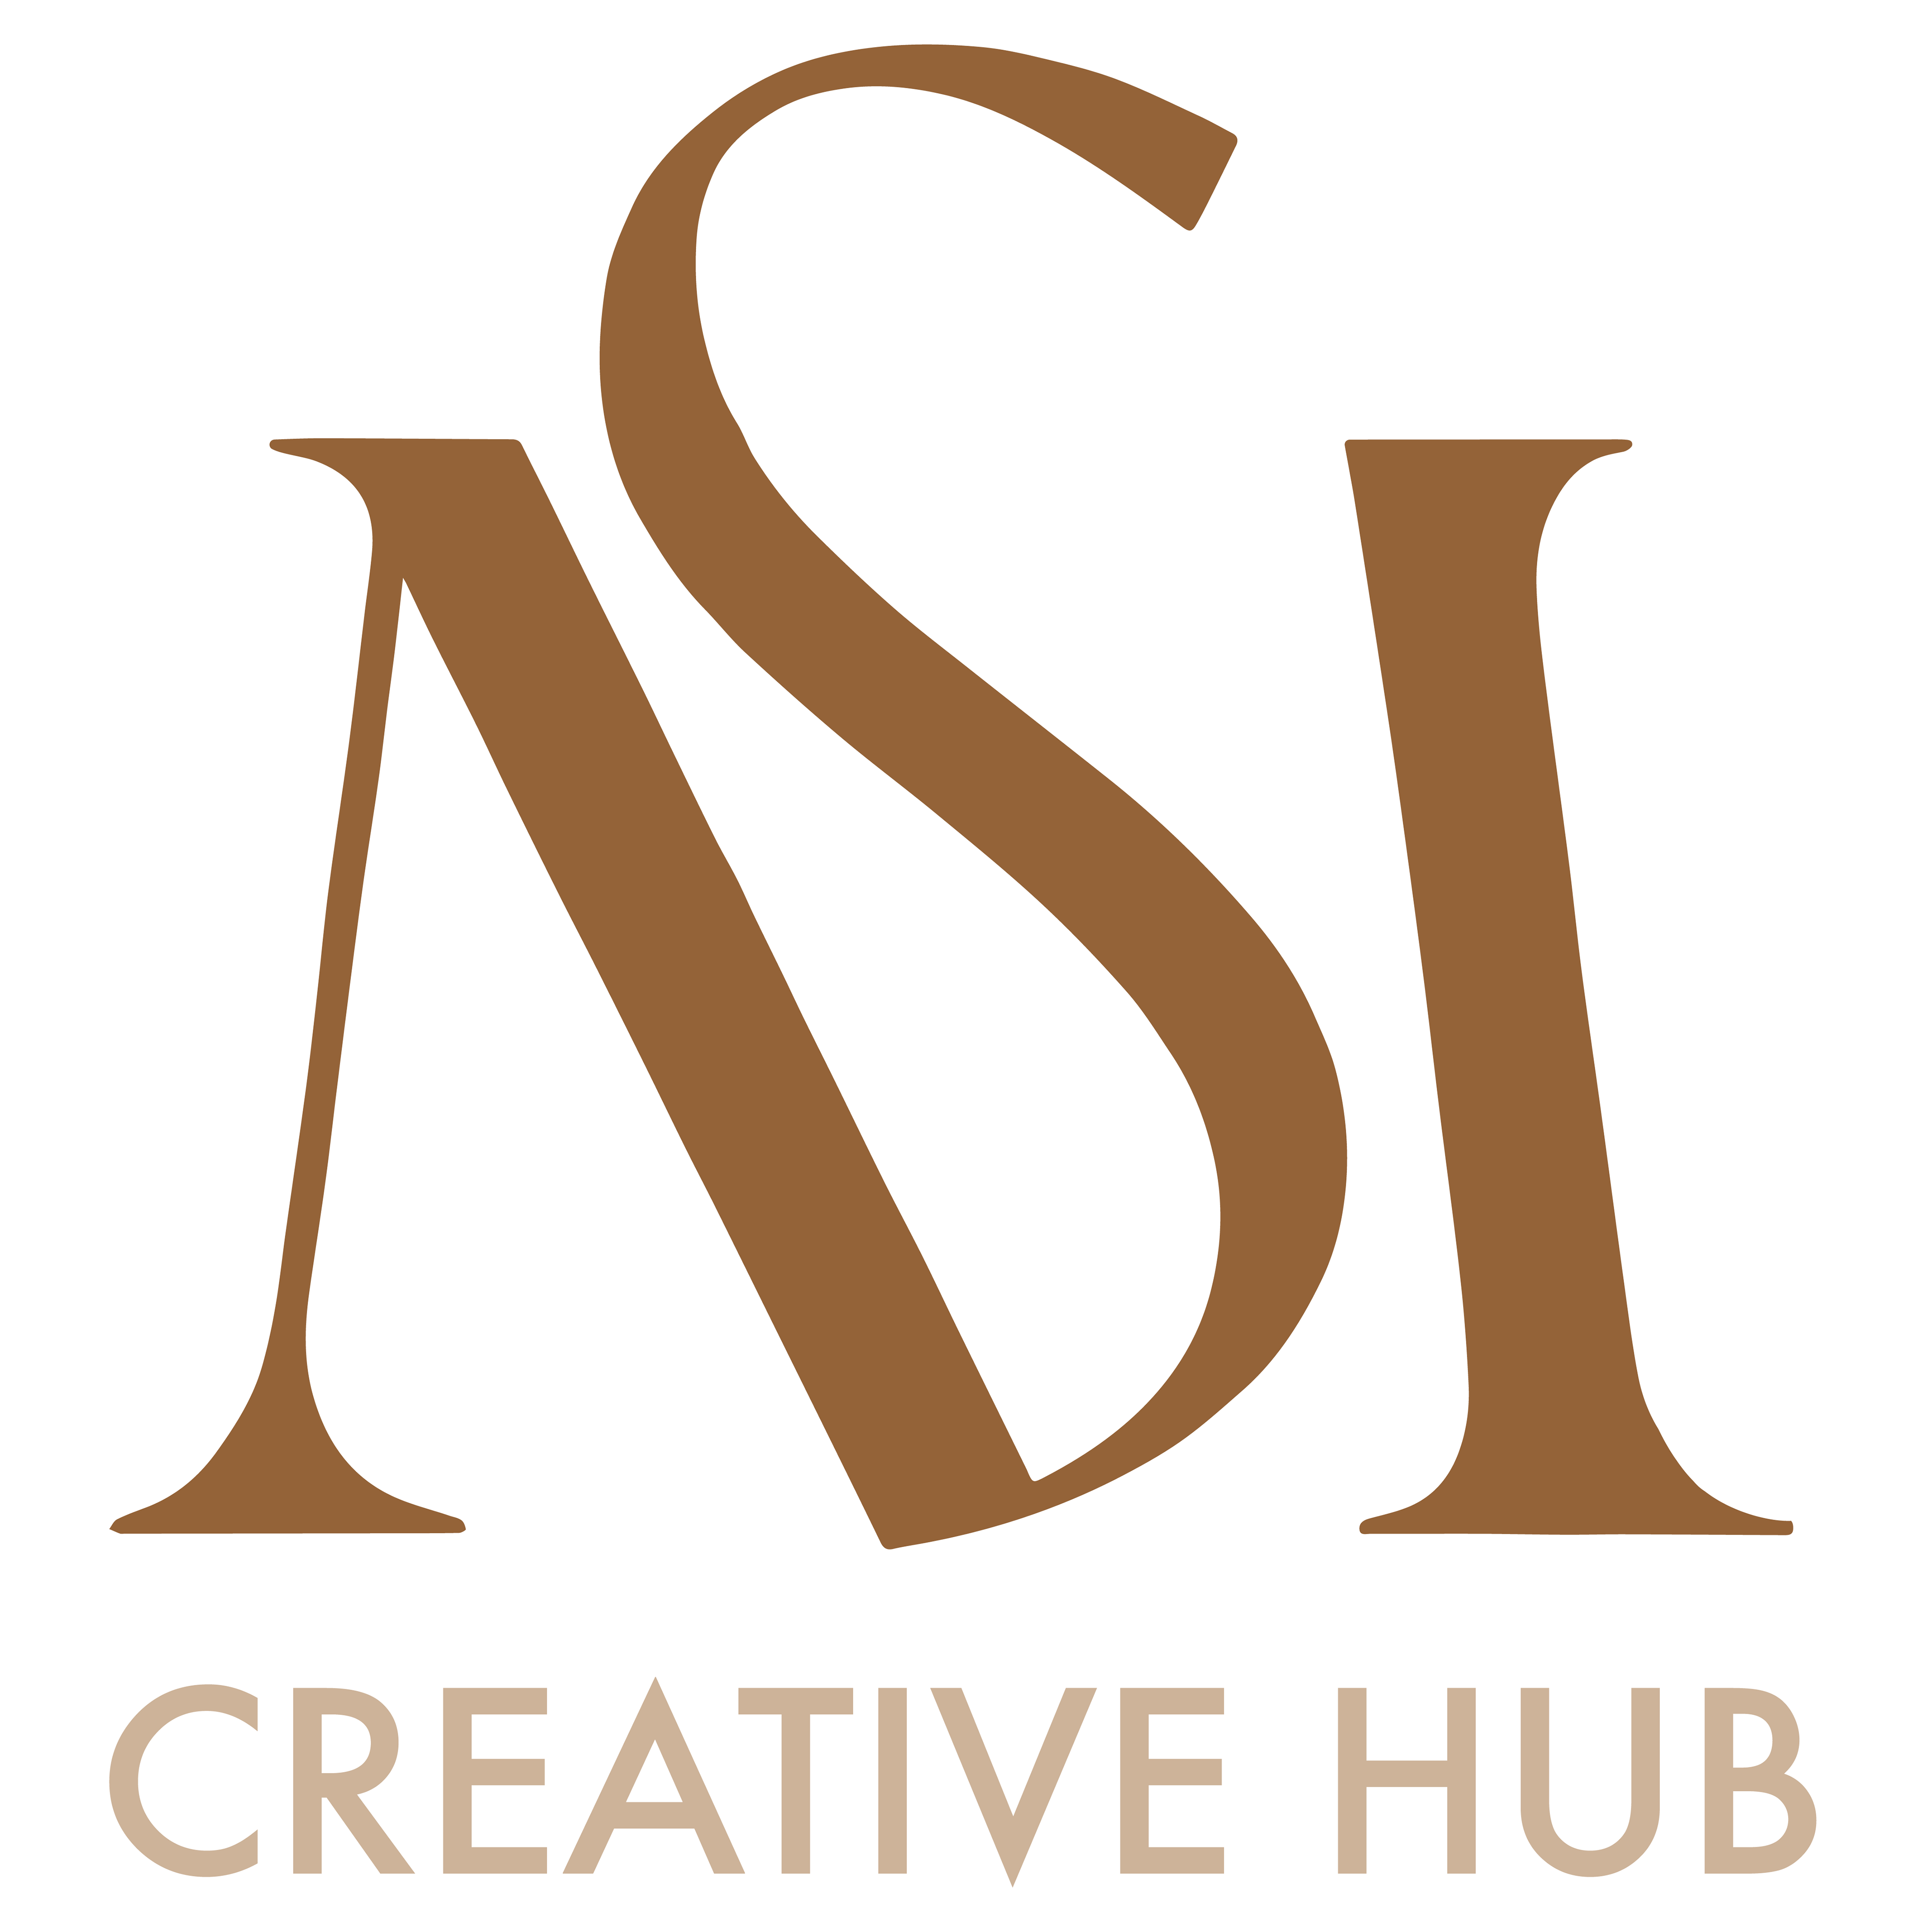 M&S Creative Hub